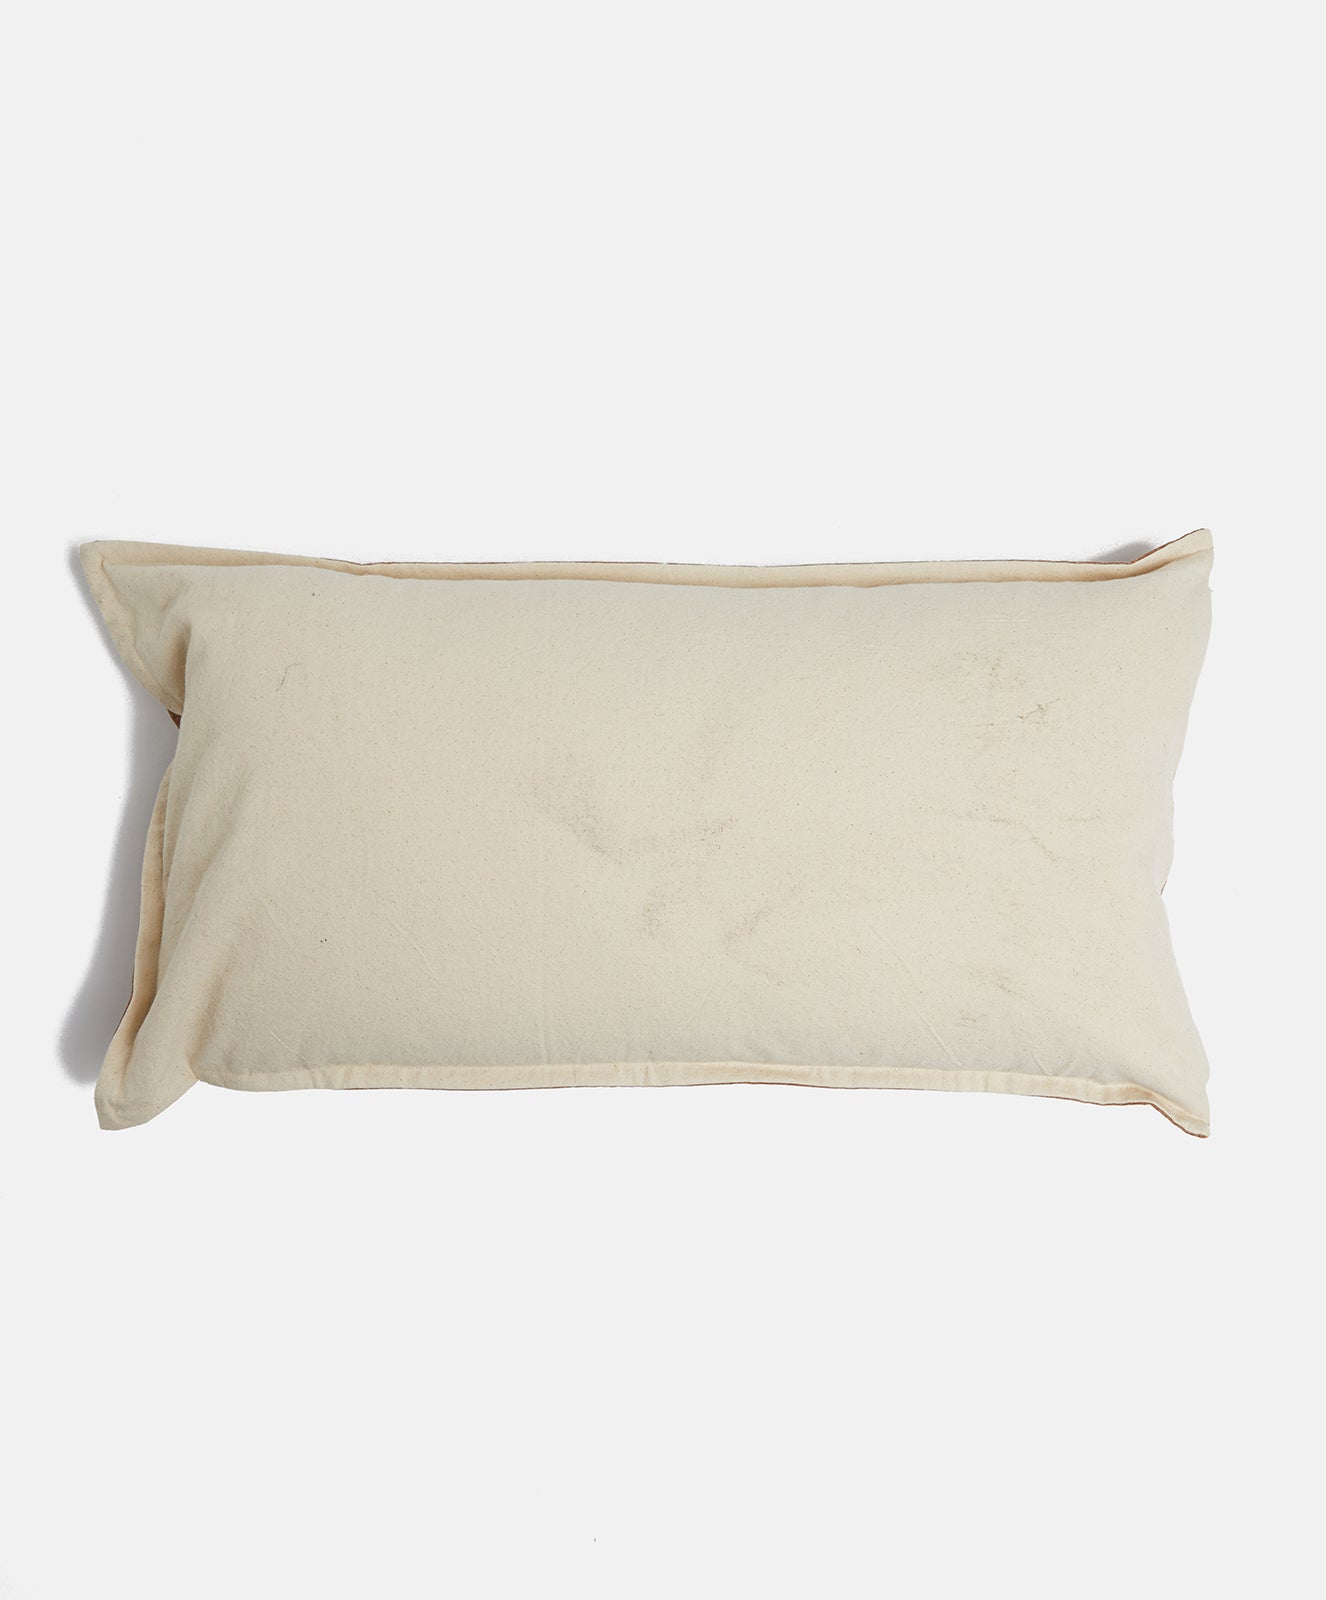 Wanderful Rectangle Cushion | Tan / Natural